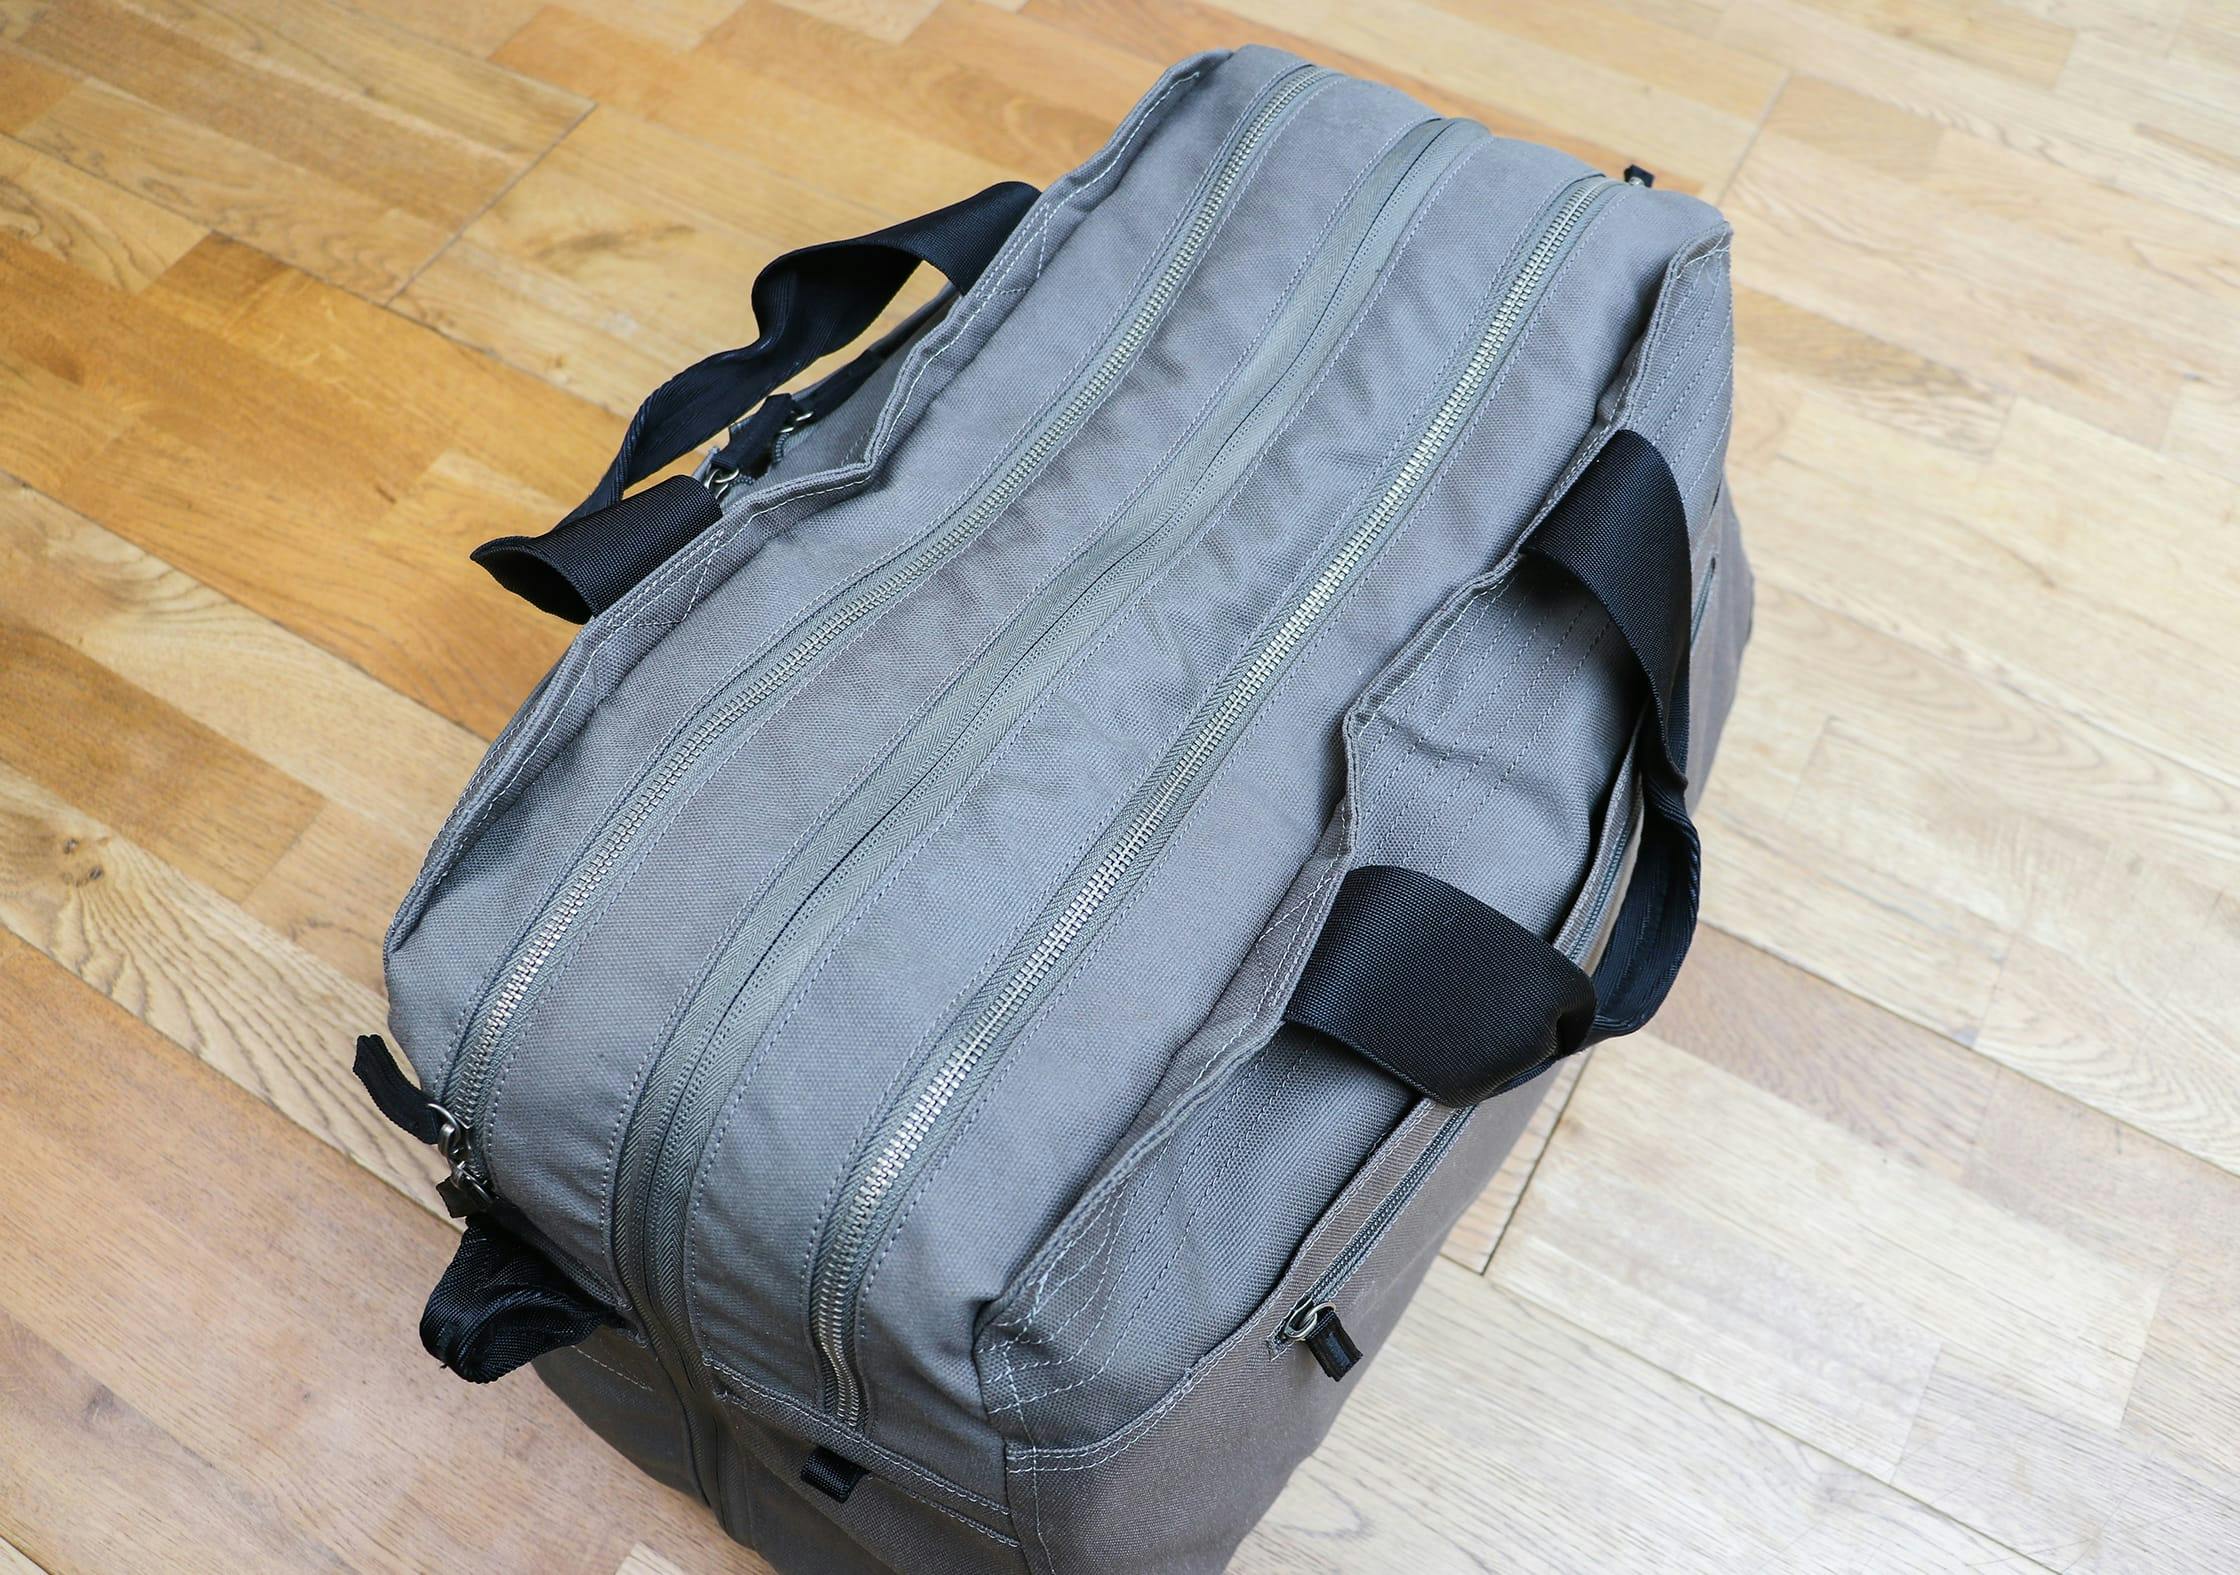 pakt travel bag review